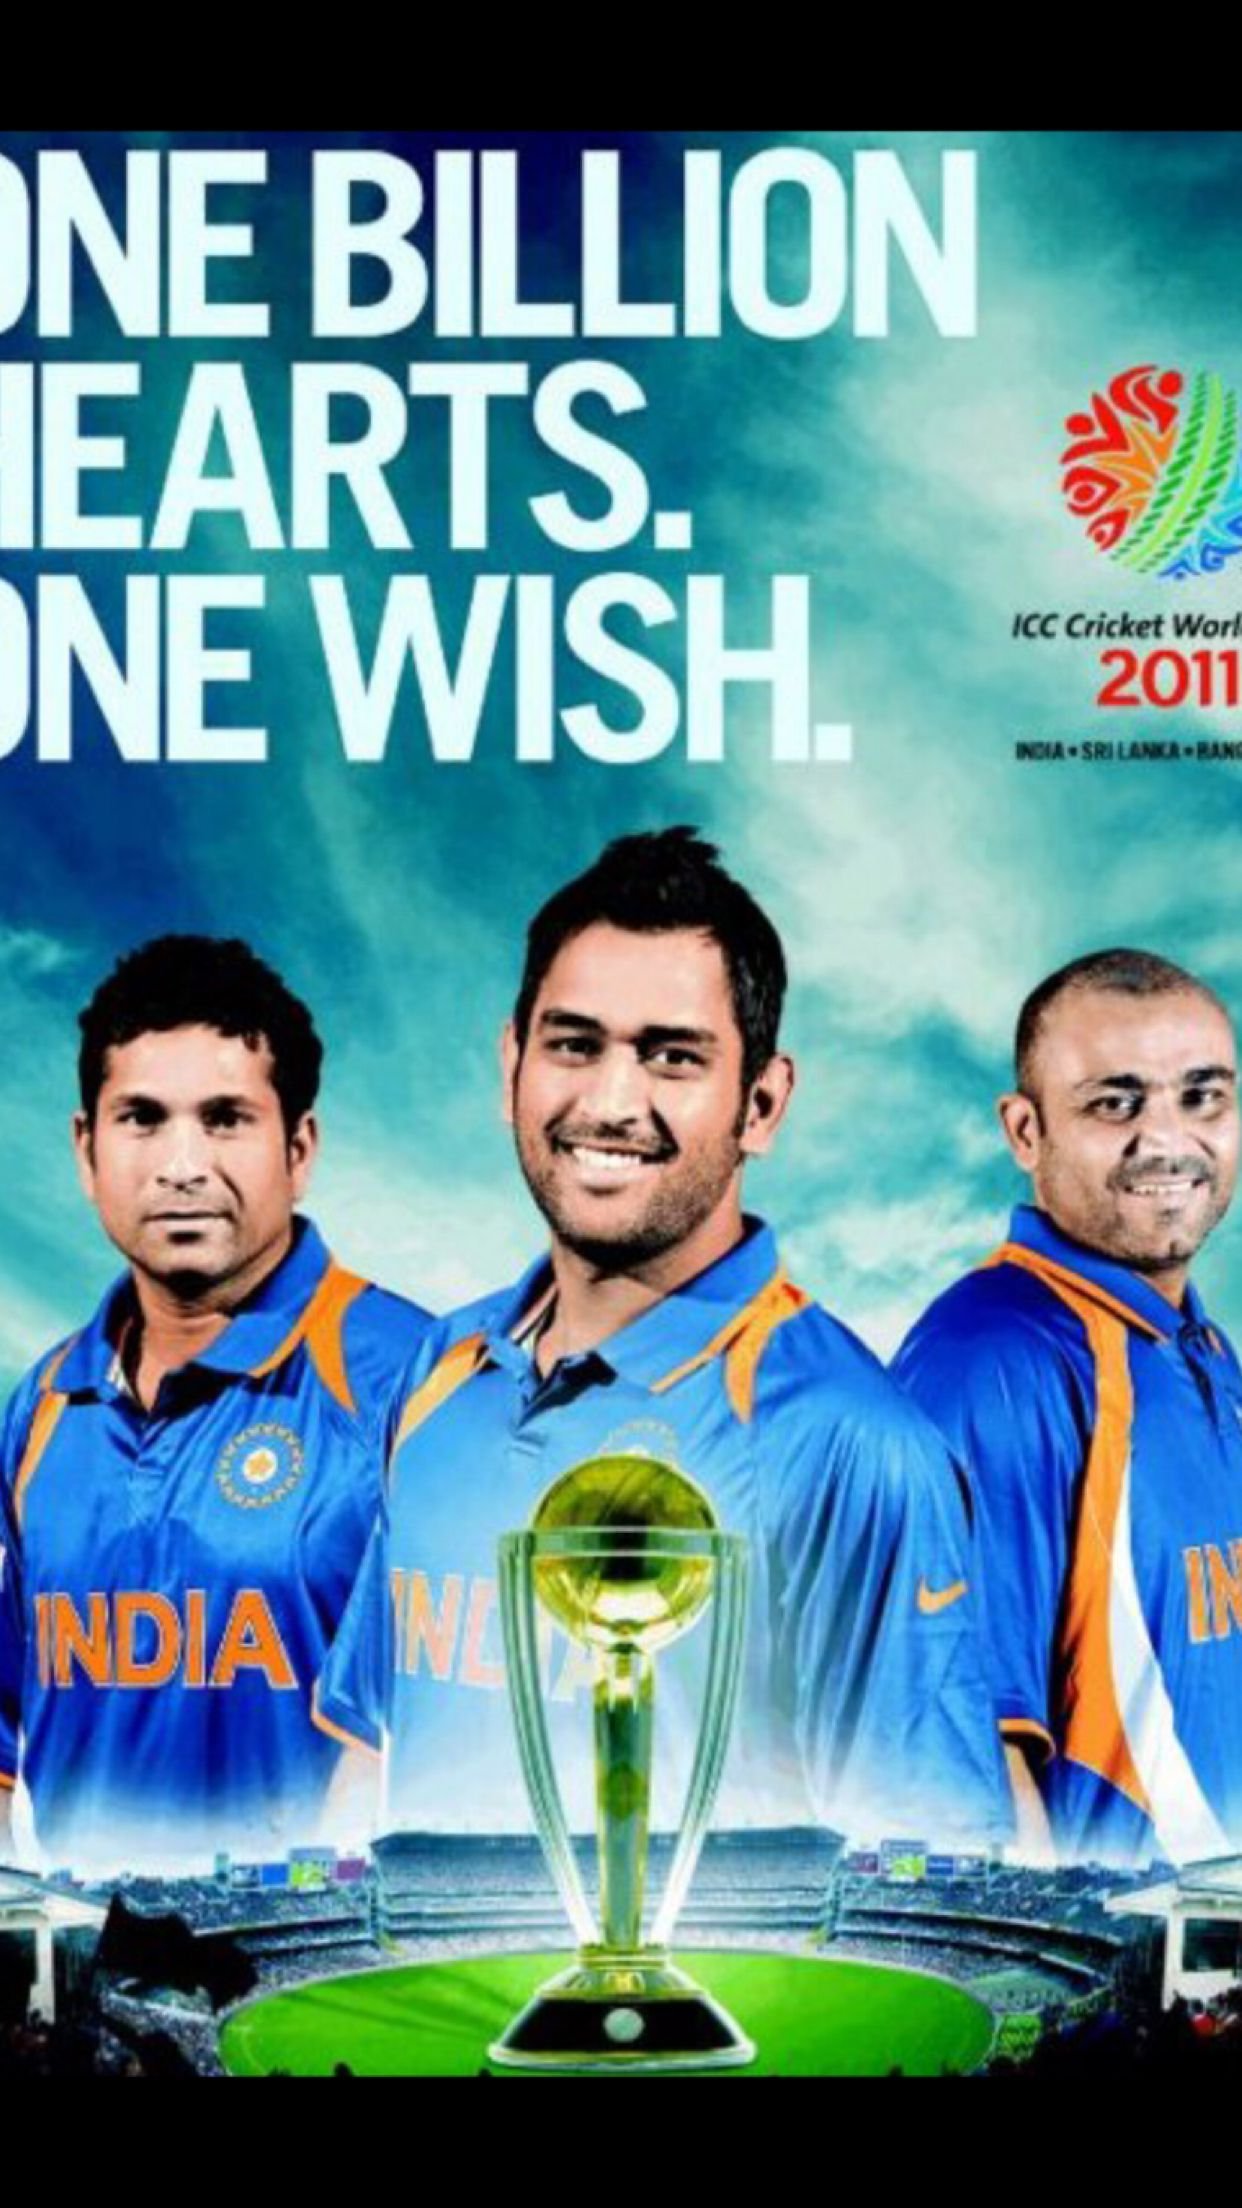 ICC Cricket World Cup 2011 by msahluwalia on DeviantArt